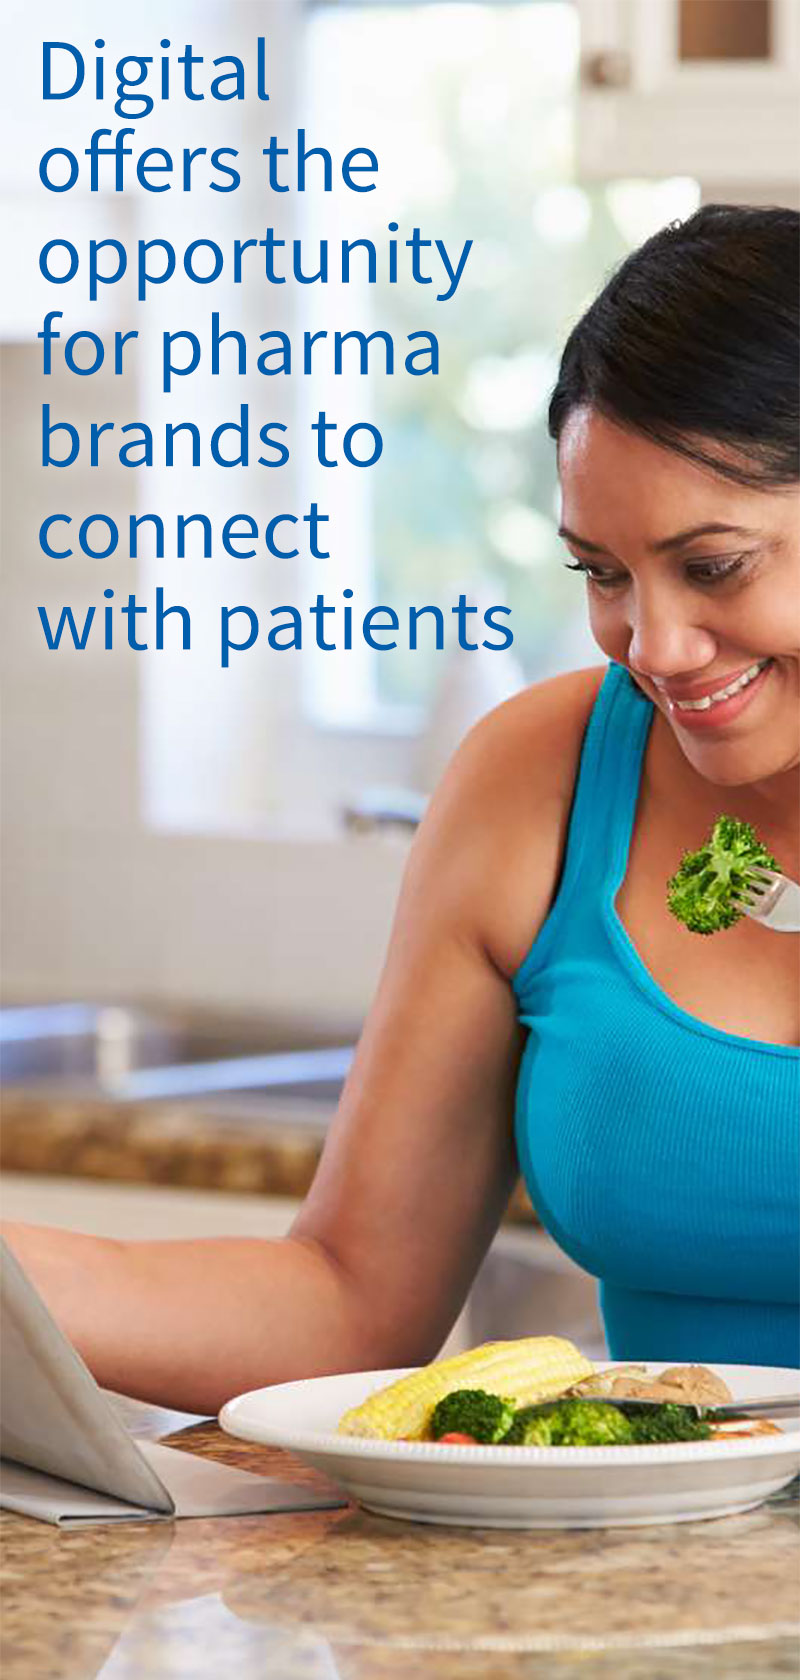 Digital offers the opportunity for pharma brands to connect with patients